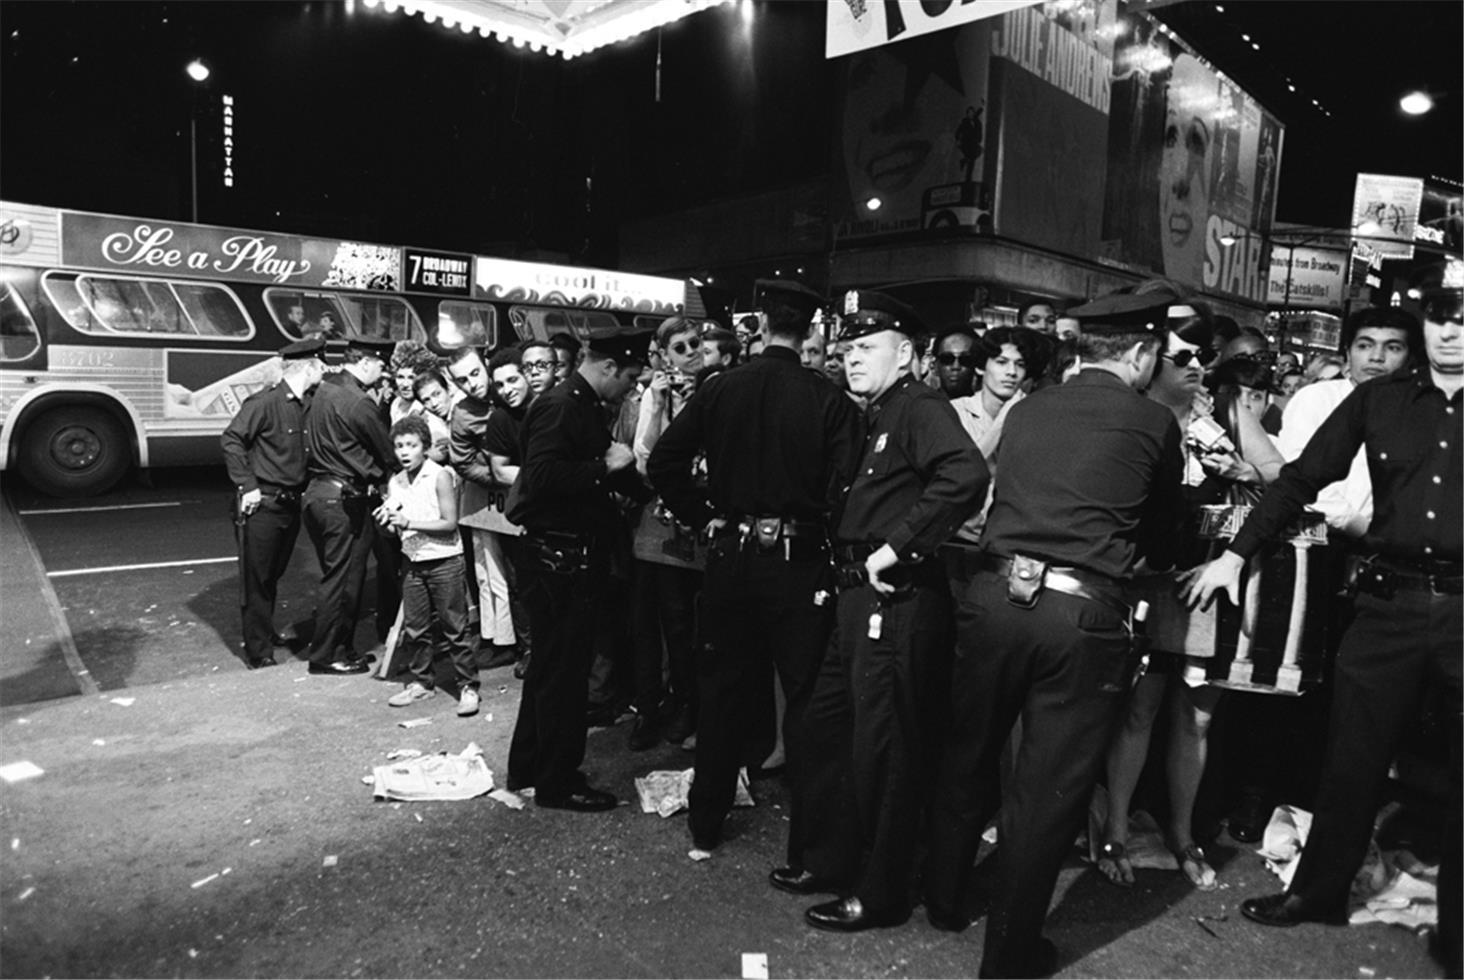 Ken Regan Portrait Photograph - Crowd Control, NYC